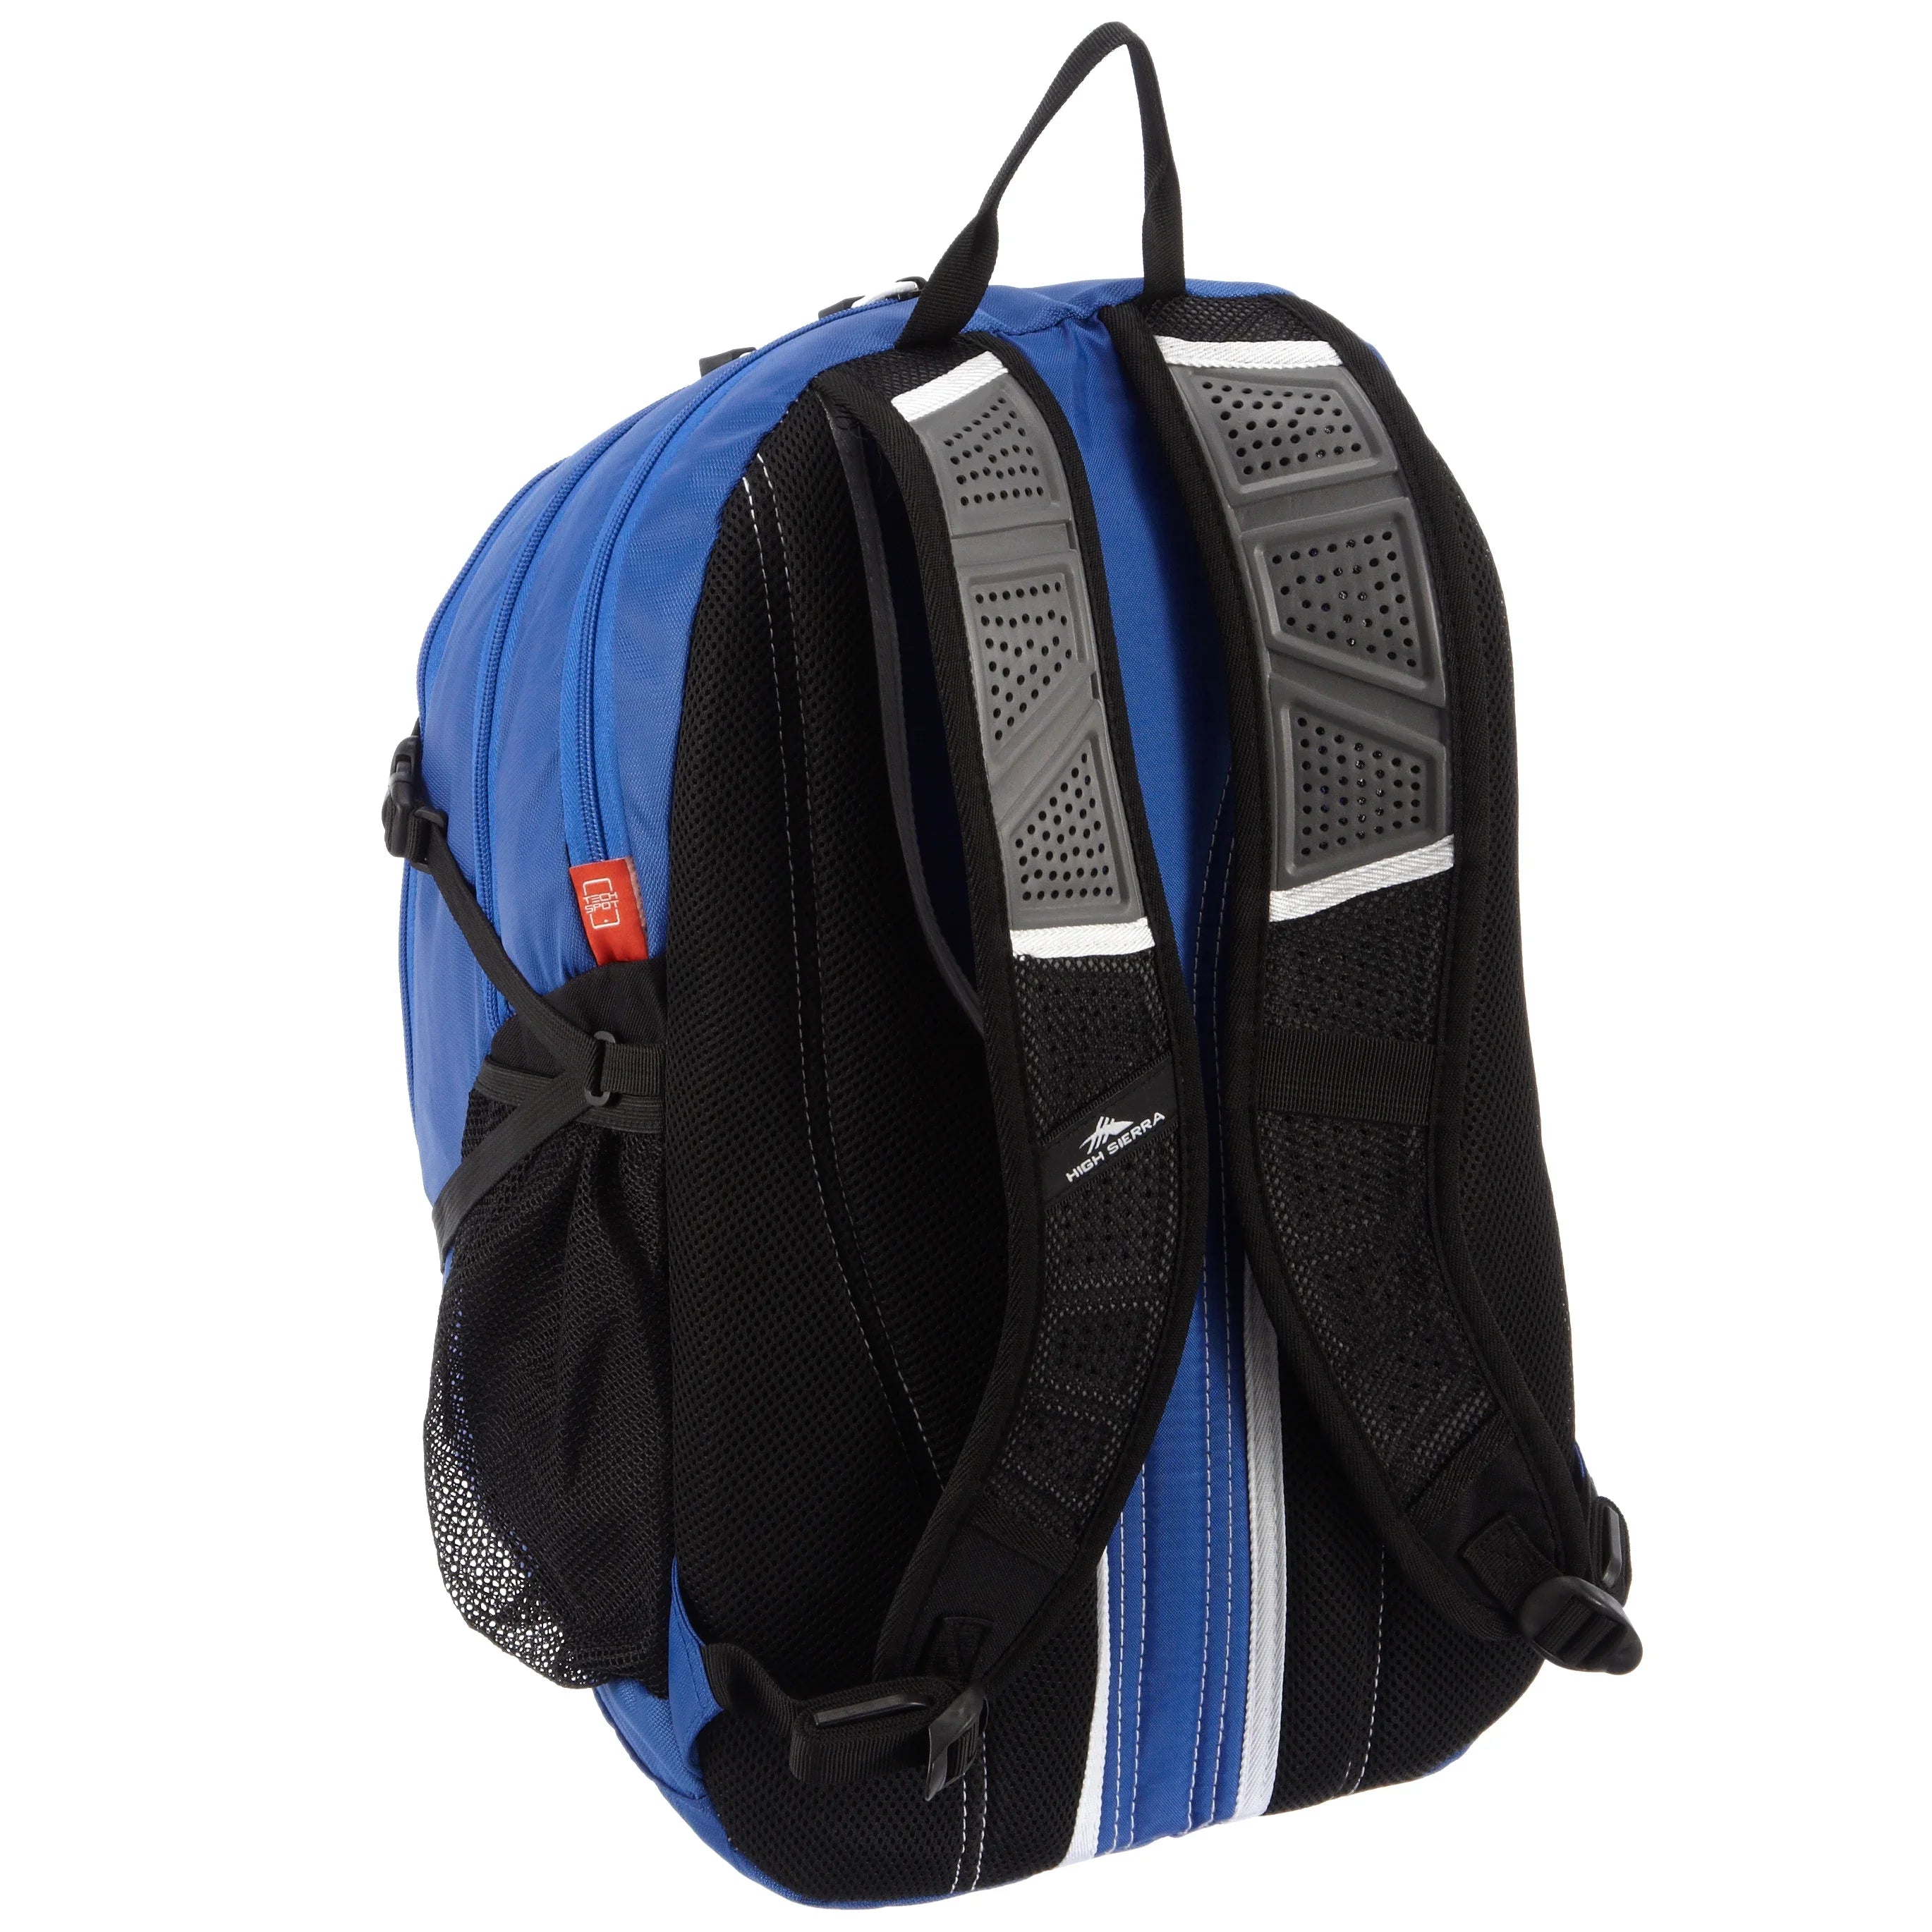 High Sierra School Backpacks Rucksack mit Laptopfach Aggro 49 cm - crimson/black/silver